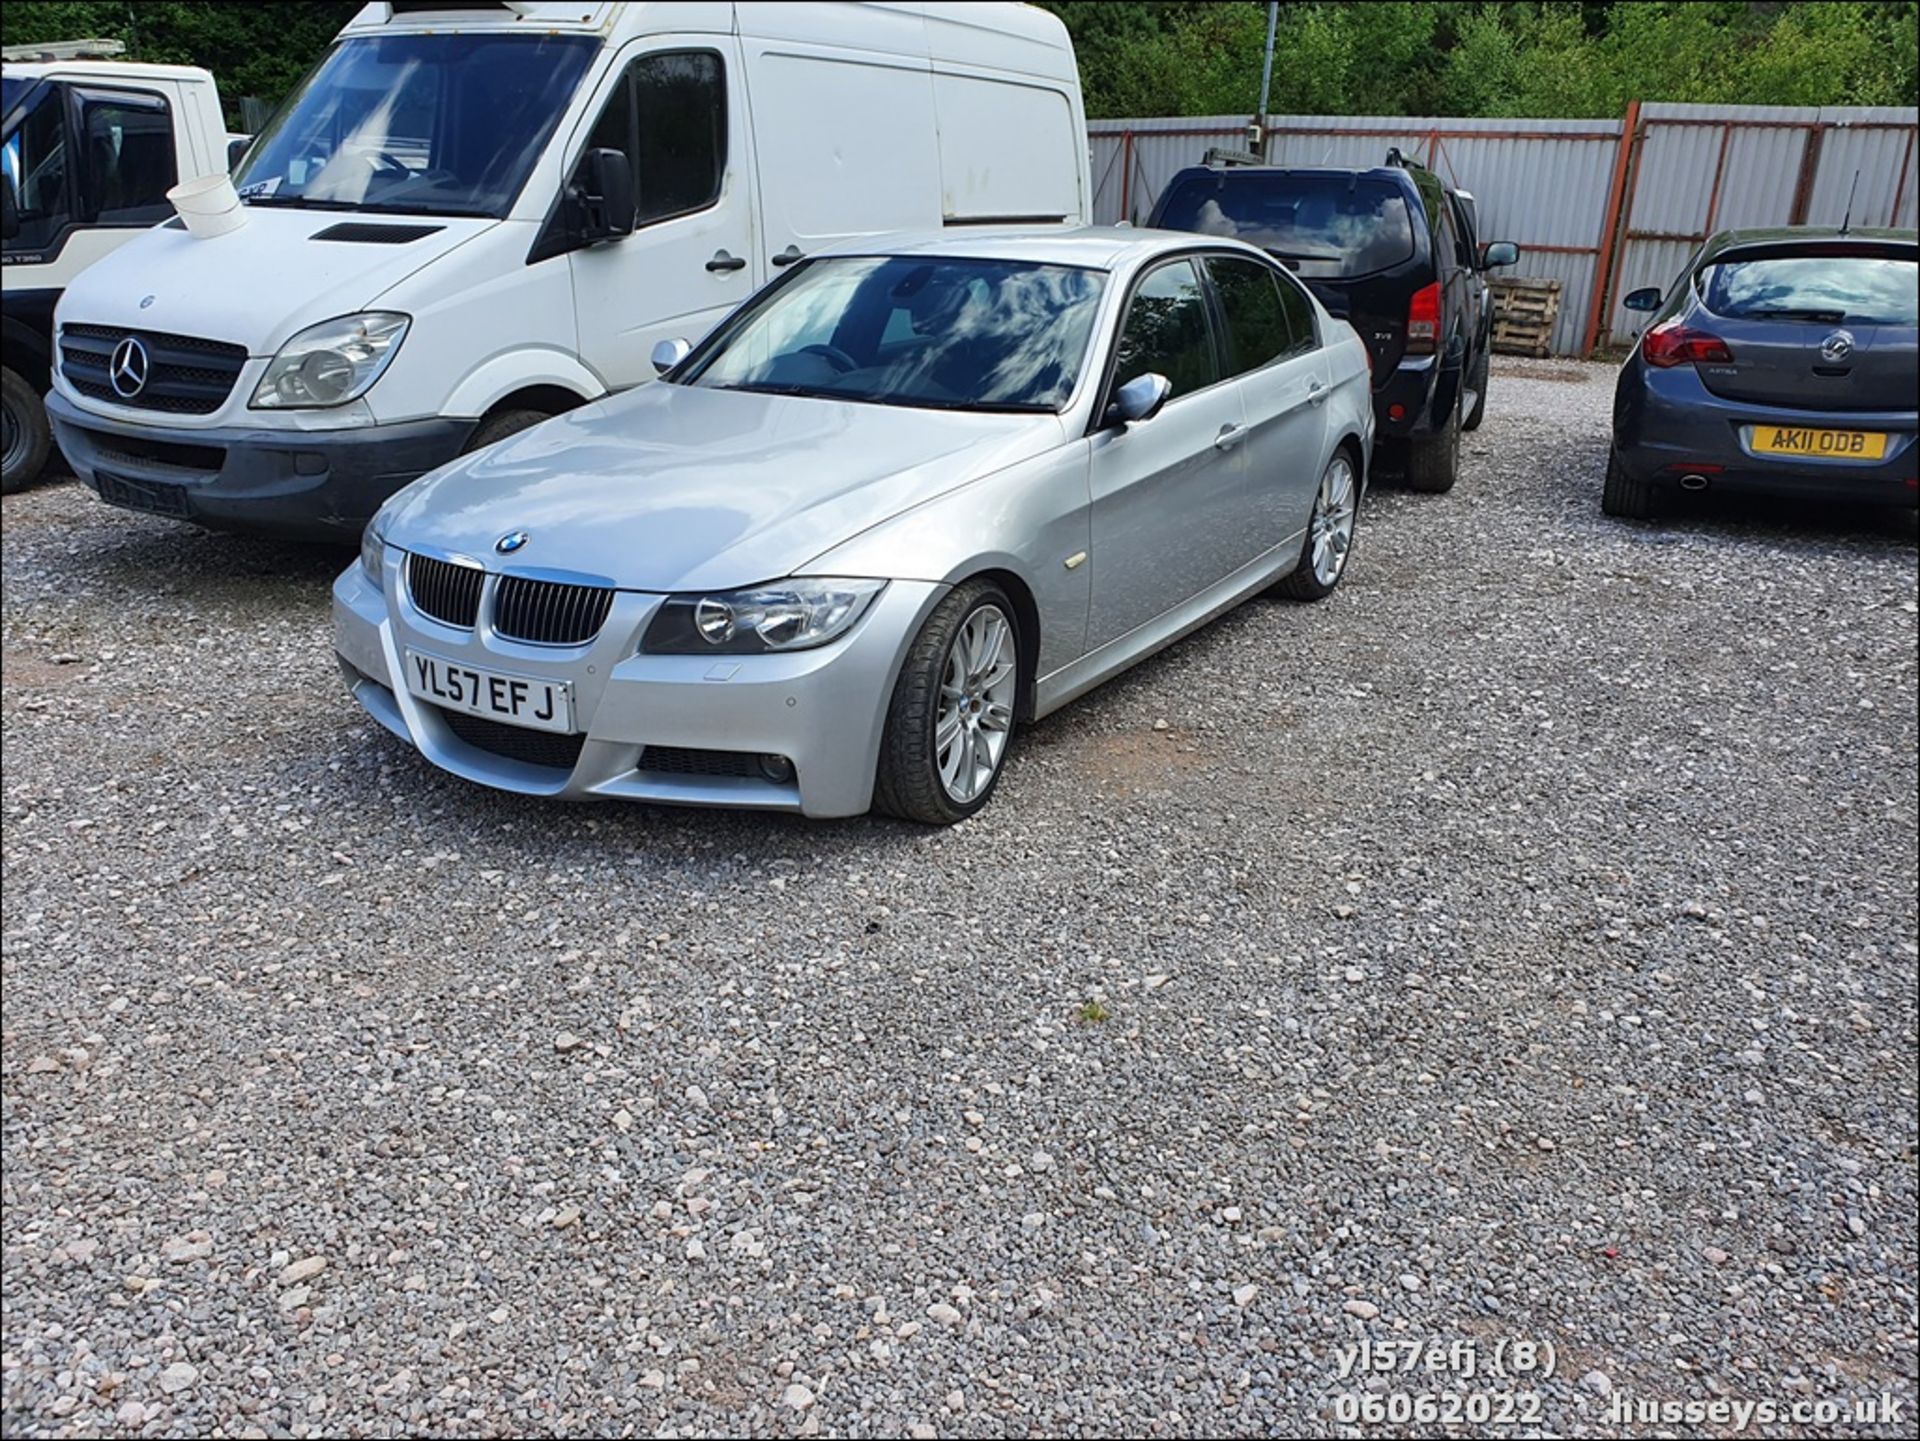 08/57 BMW 330D M SPORT AUTO - 2993cc 4dr Saloon (Silver) - Image 9 of 39